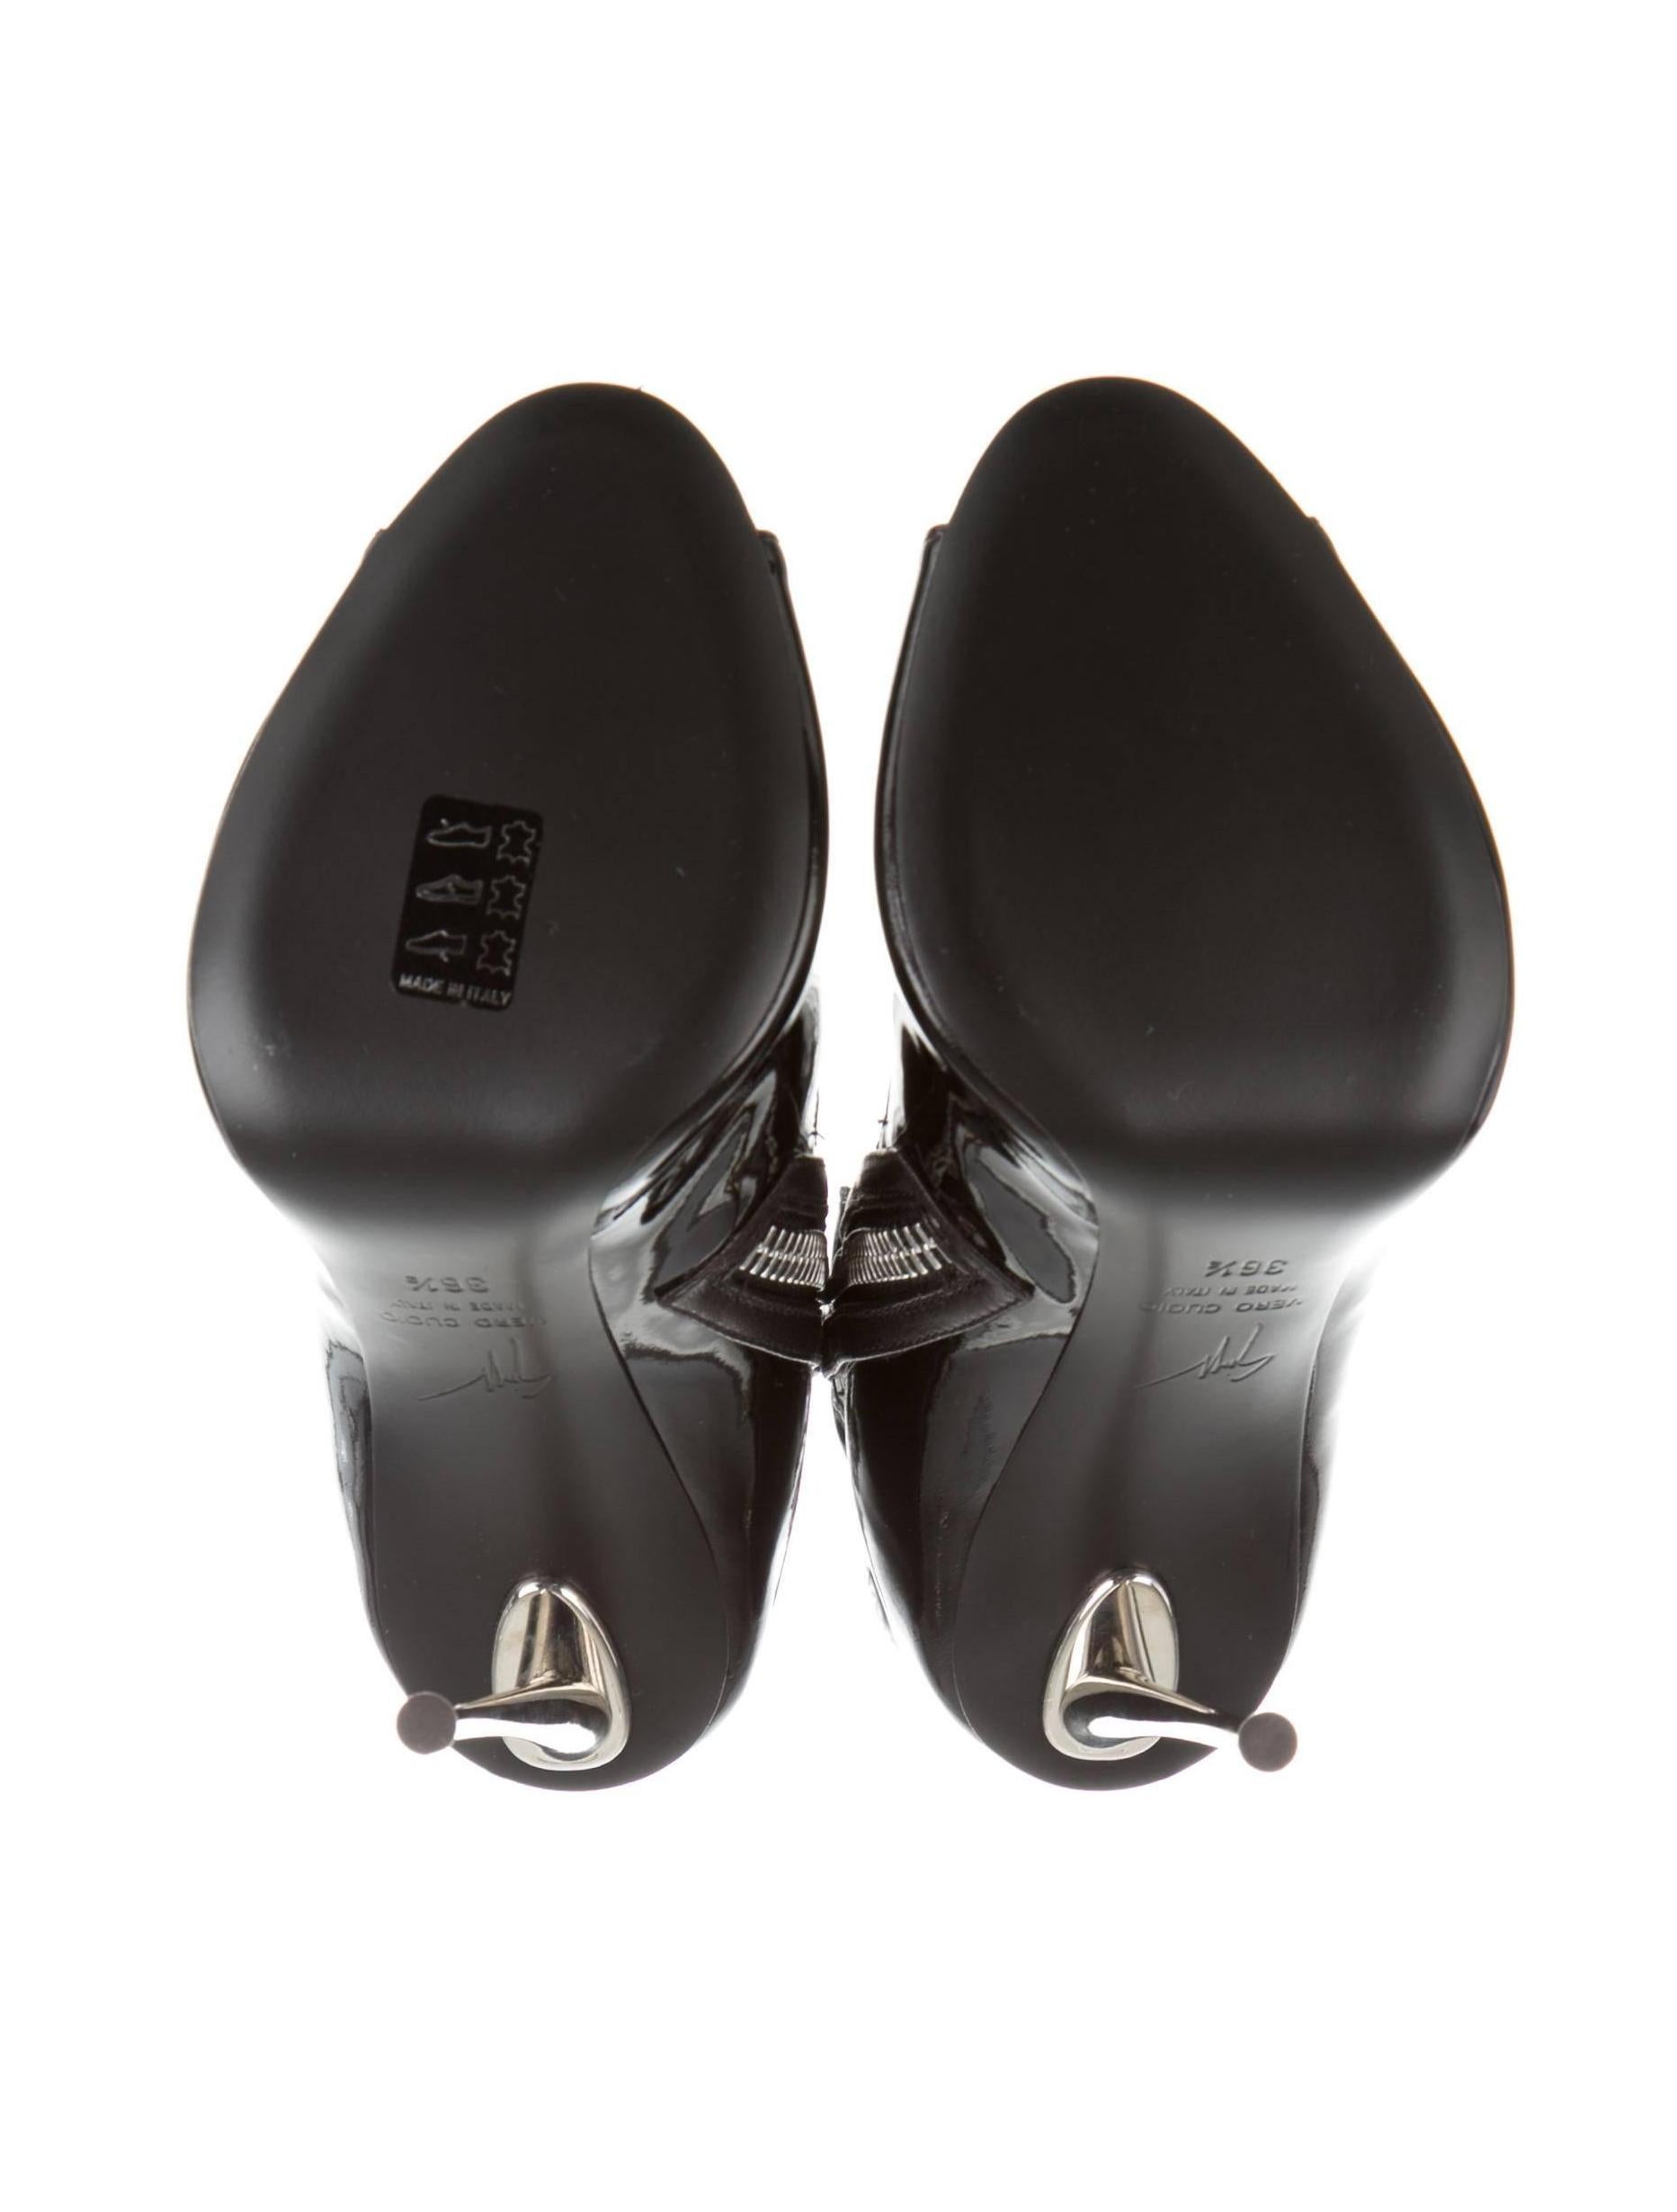 Giuseppe Zanotti NEW Black Patent Leather Silver Stiletto Heels Booties in Box 2